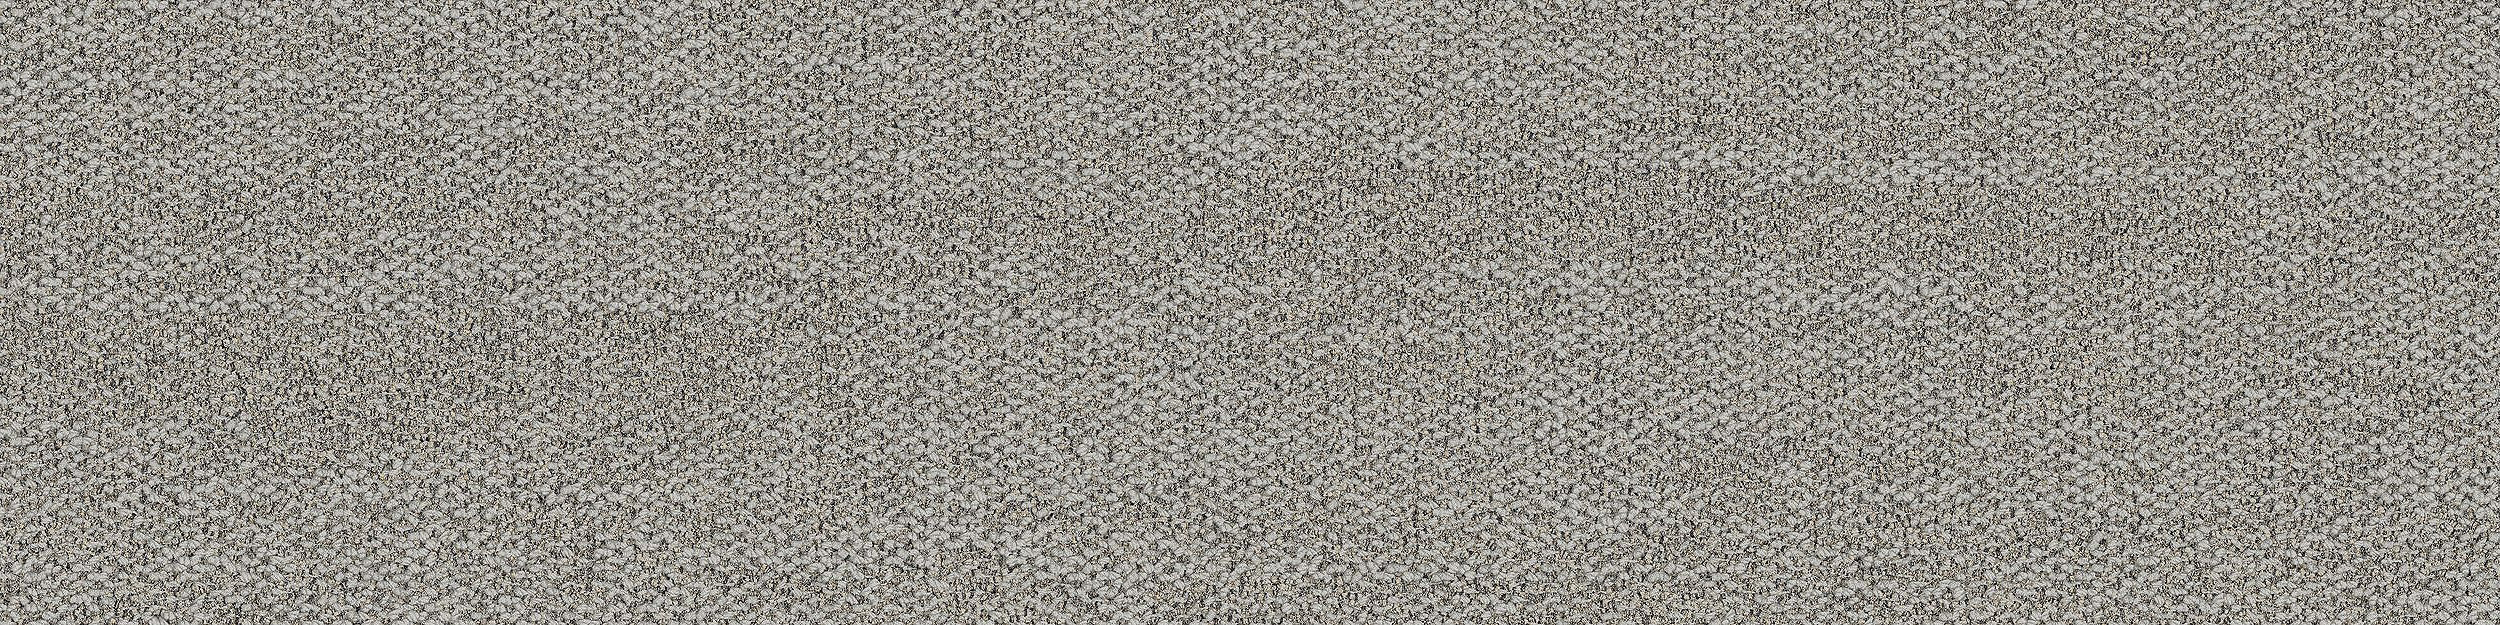 Open Air 402 Carpet Tile In Linen image number 6